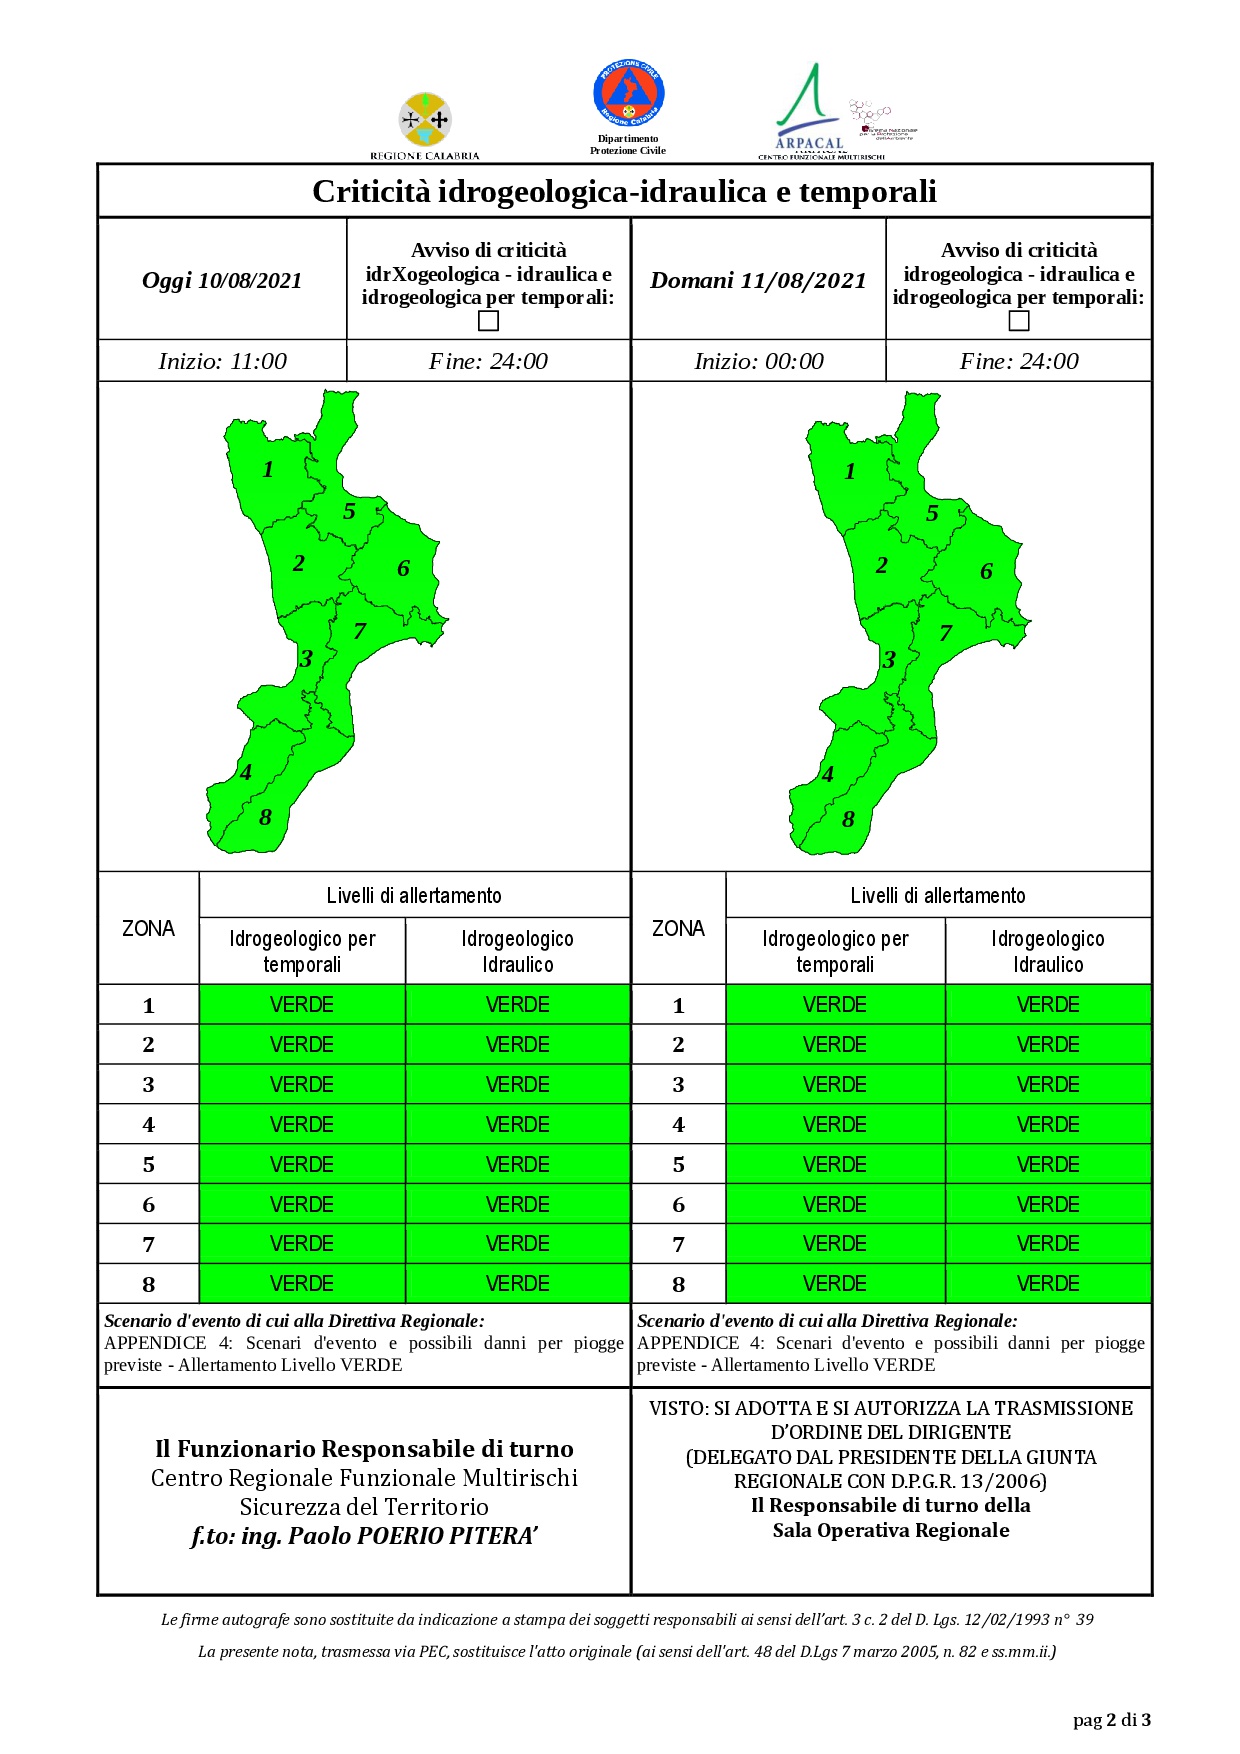 Criticità idrogeologica-idraulica e temporali in Calabria 10-08-2021